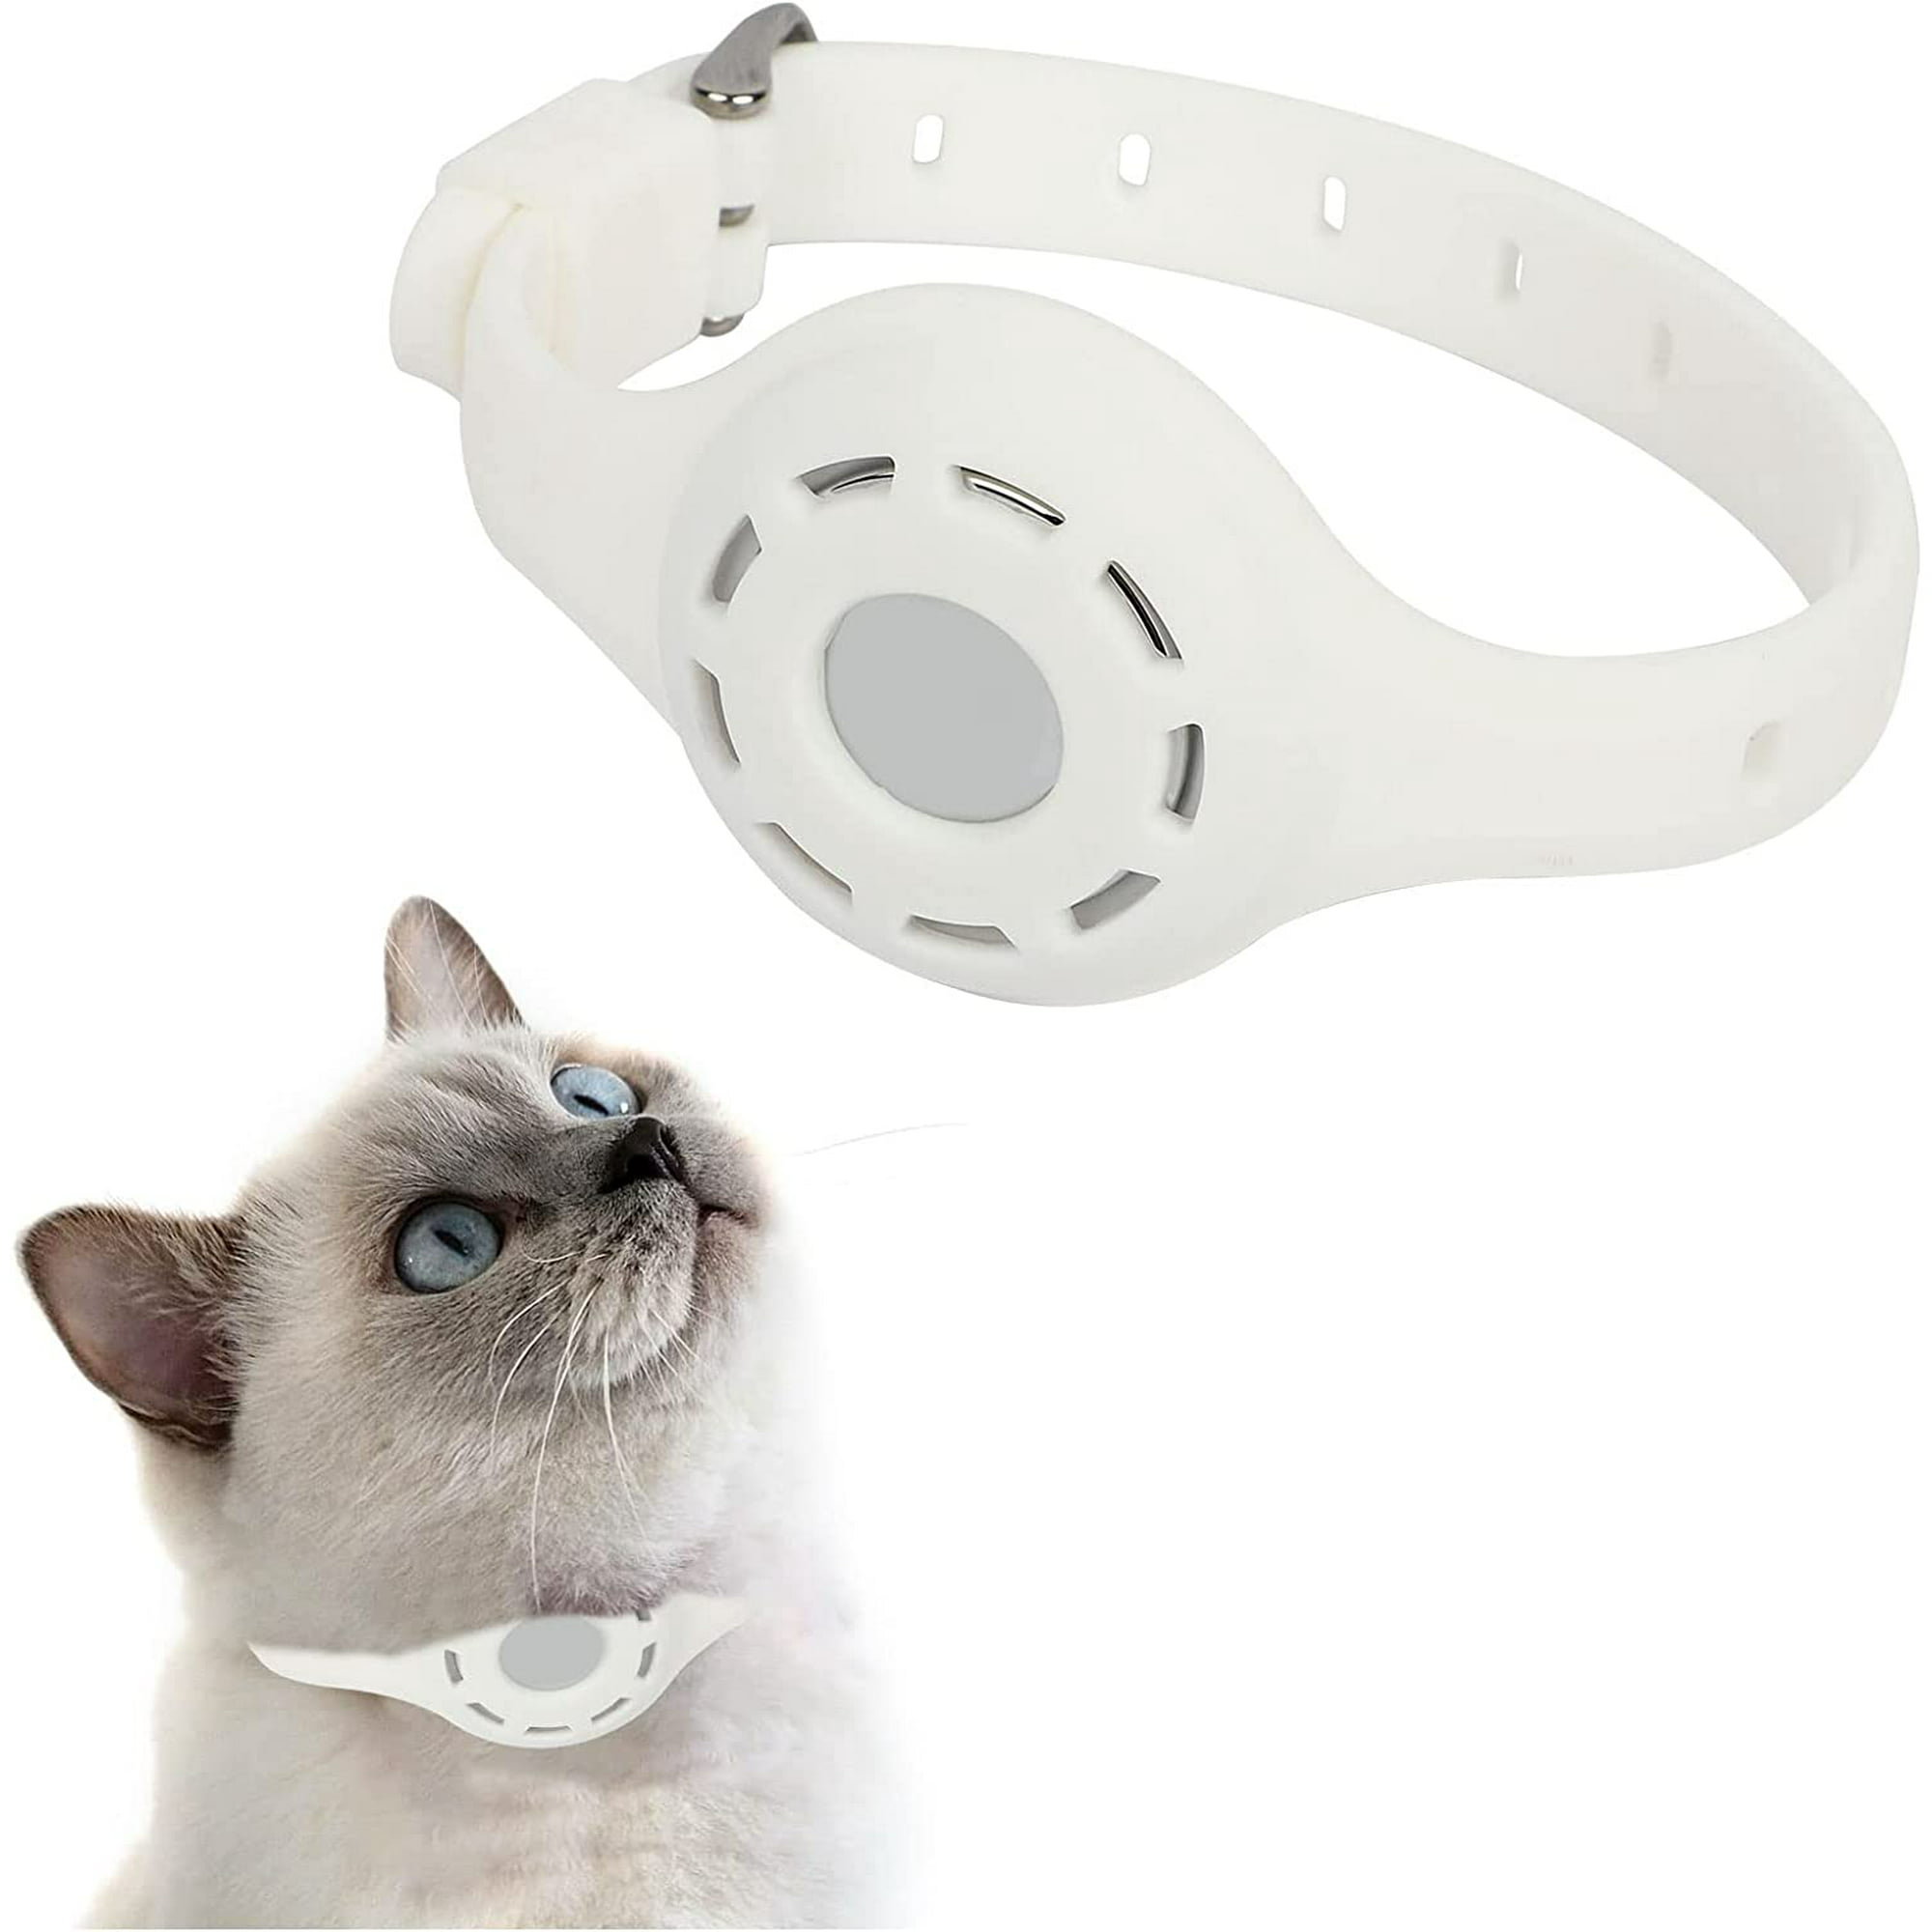 Llavero Collar Para Mascota Perro/gato Para Apple Airtag